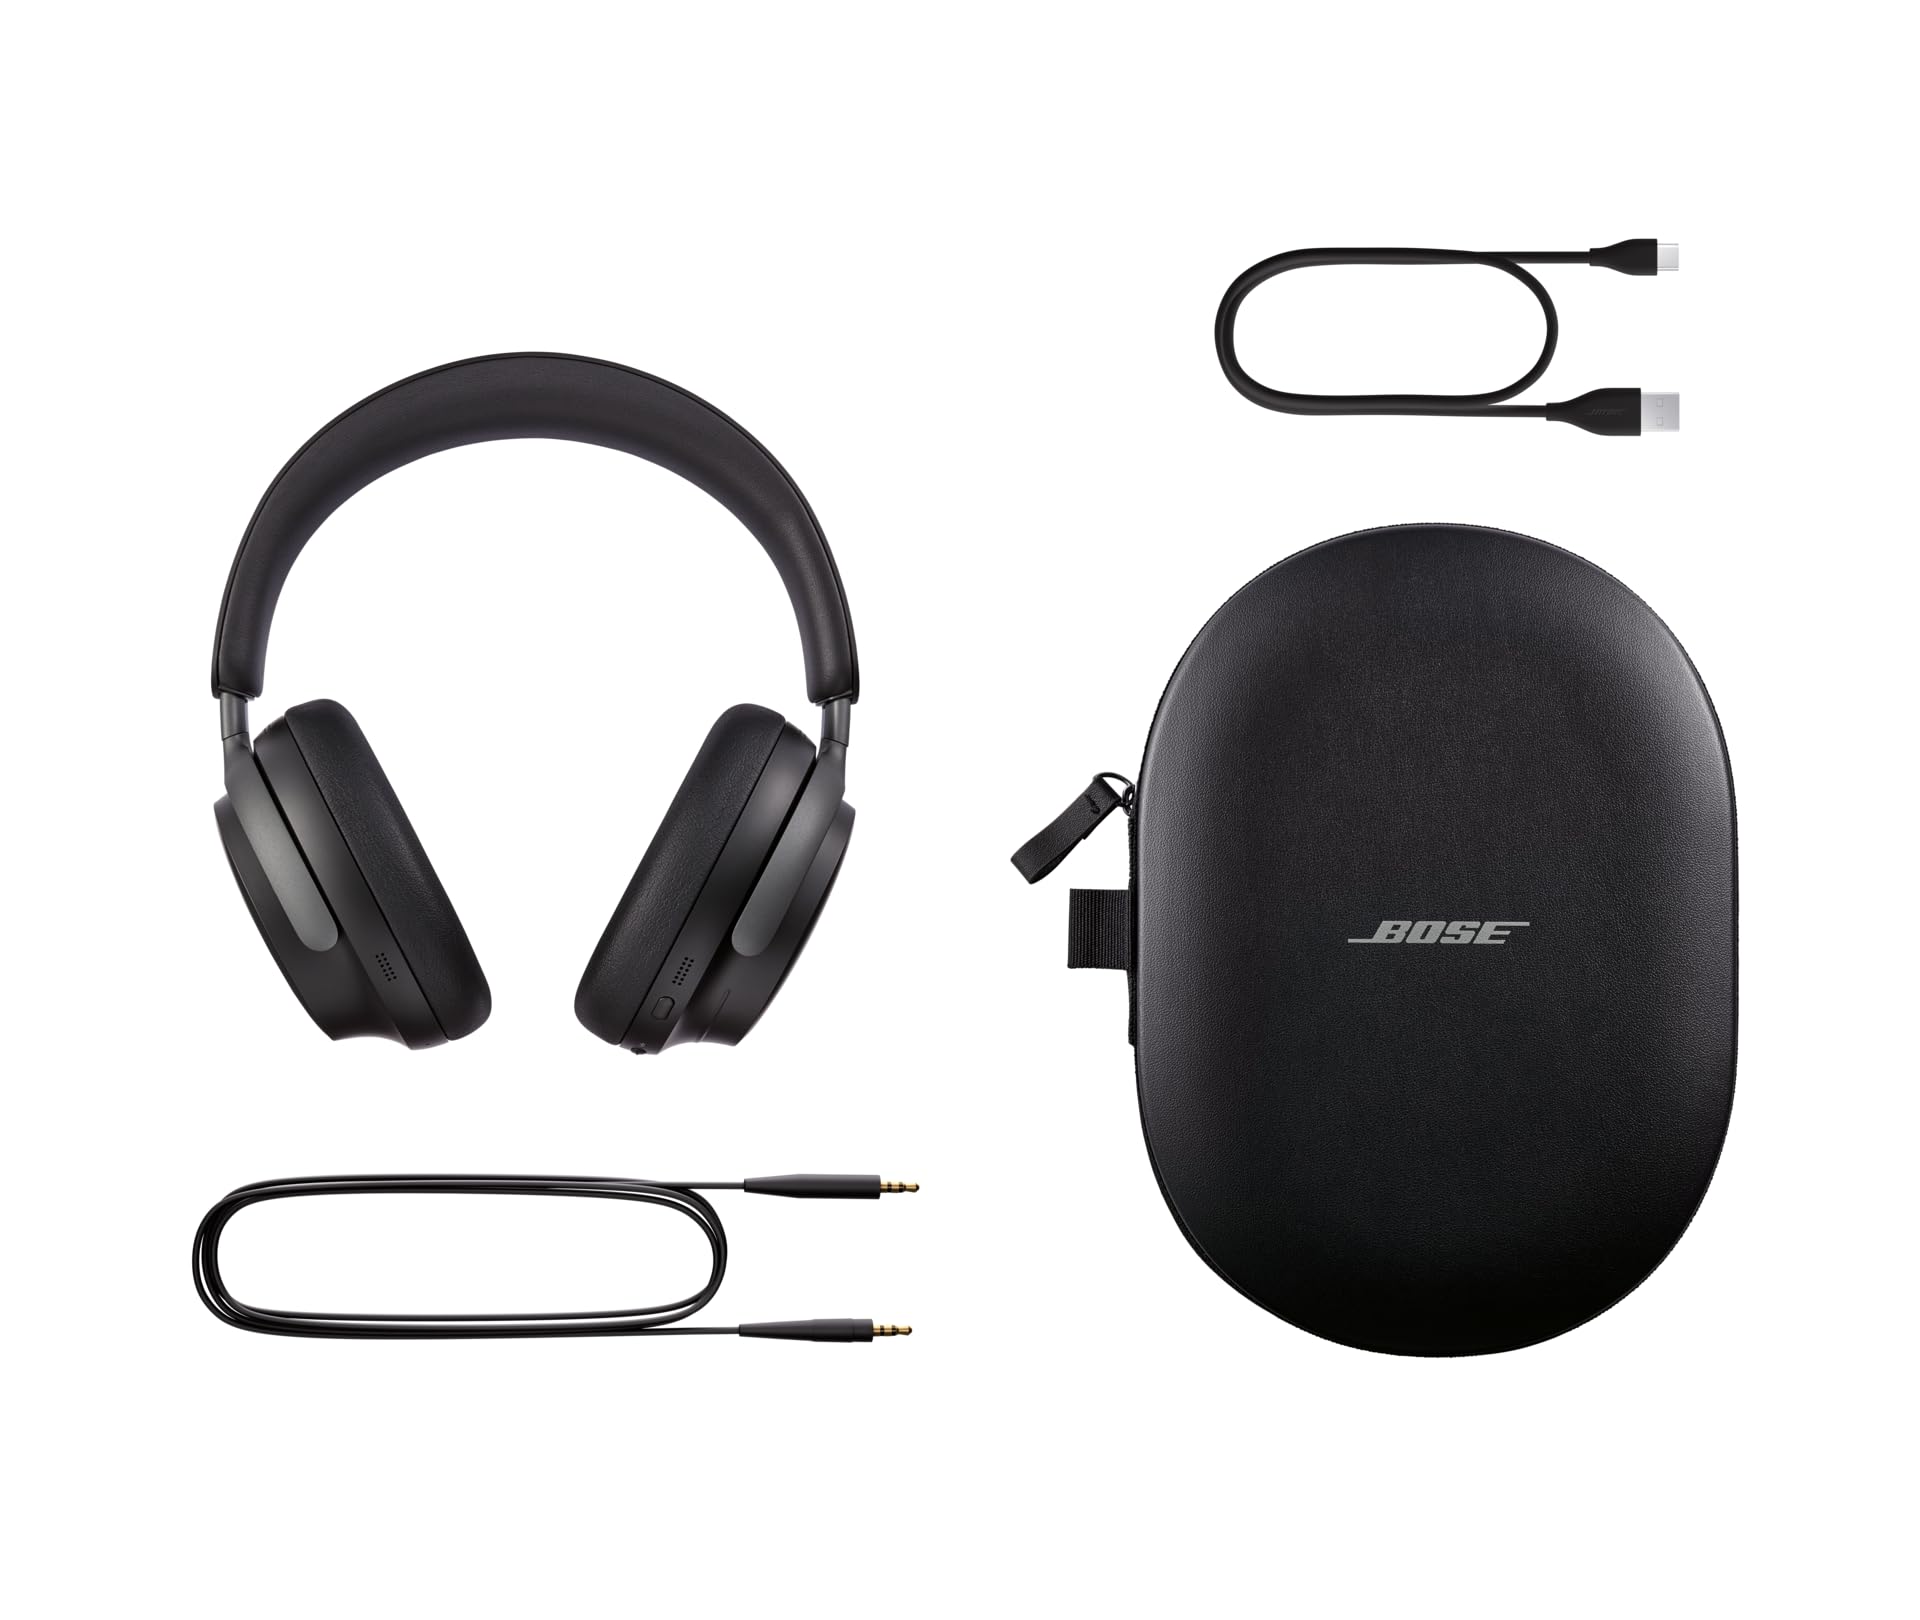 Bose QuietComfort Ultra Wireless Noise Cancelling Headphones, (White Smoke)